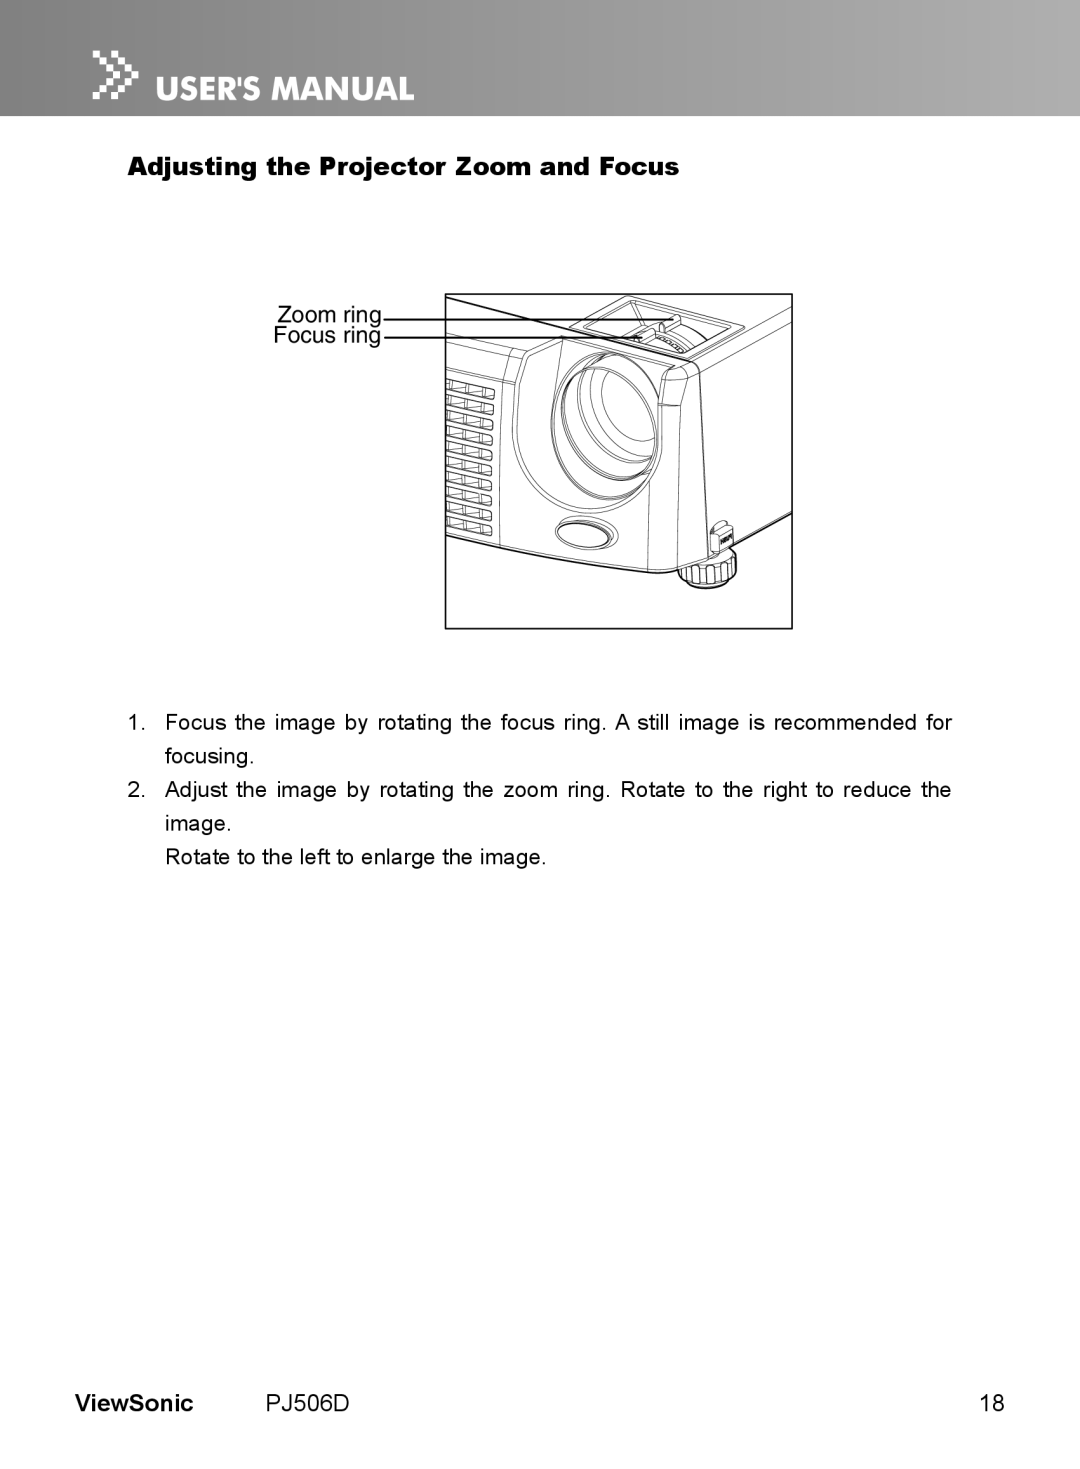 ViewSonic VS11452 manual Adjusting the Projector Zoom and Focus, Zoom ring Focus ring, ViewSonic, PJ506D 